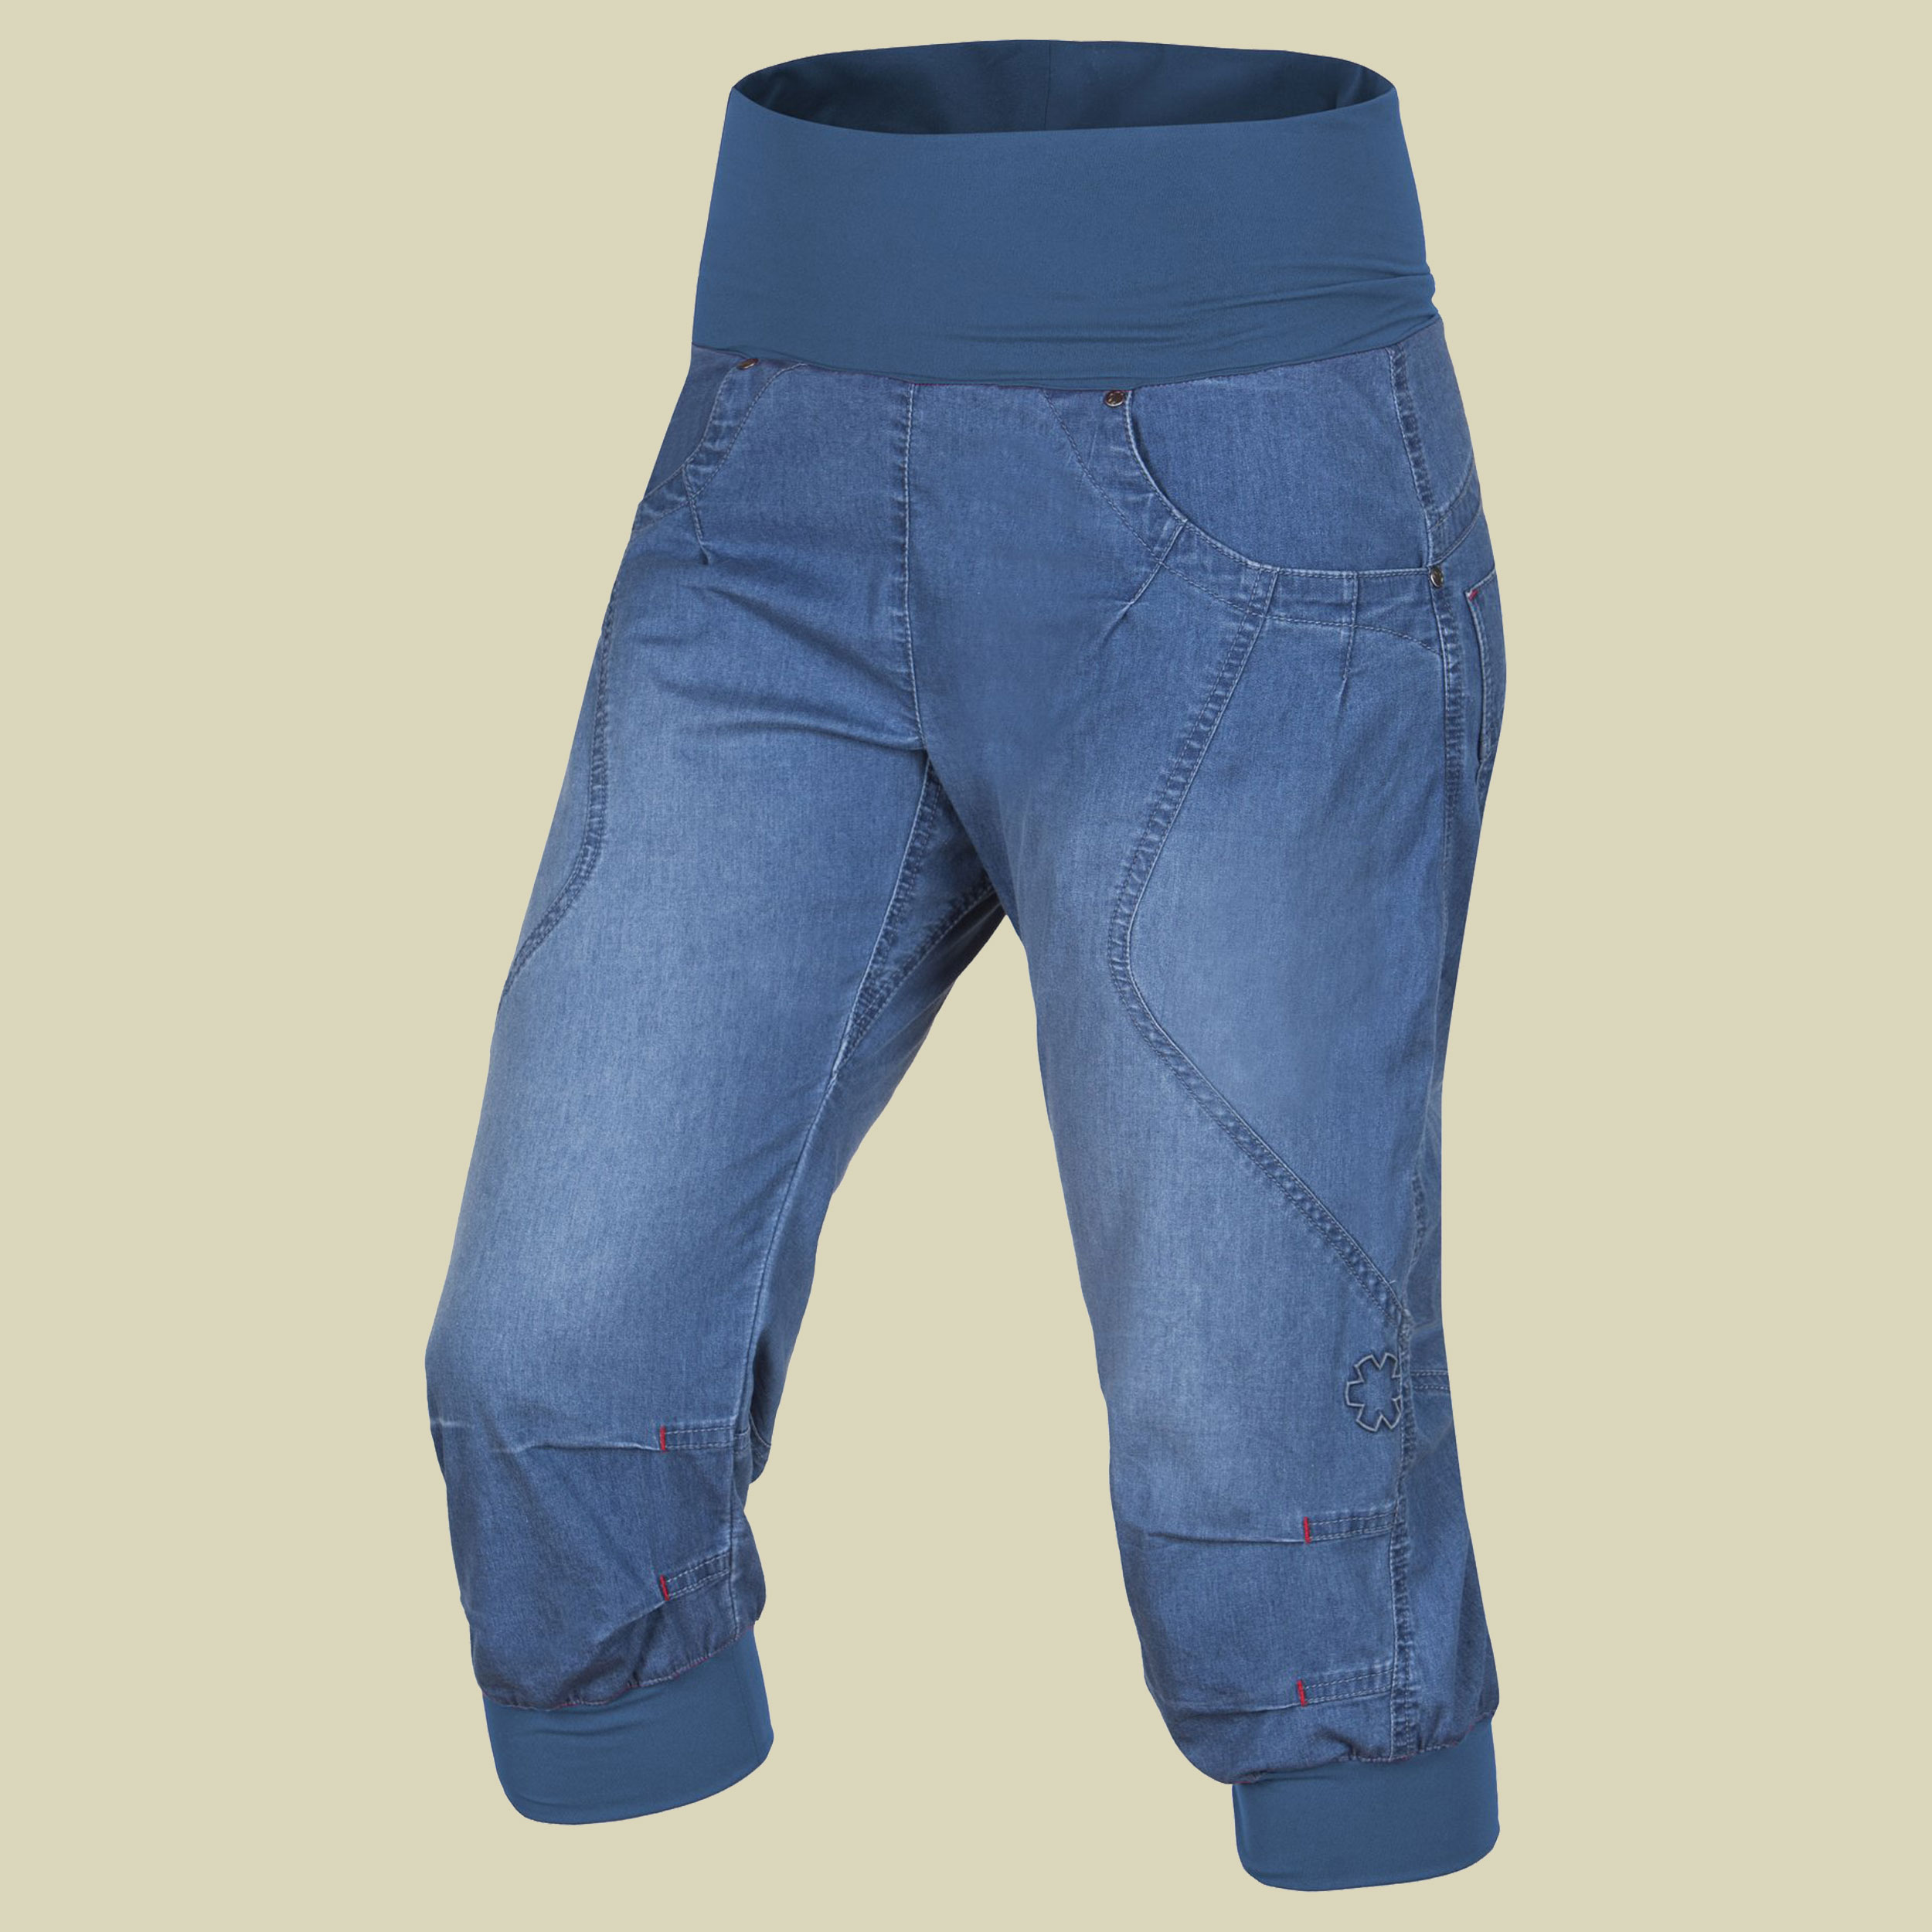 Noya Shorts Jeans Women Größe XS Farbe middle blue